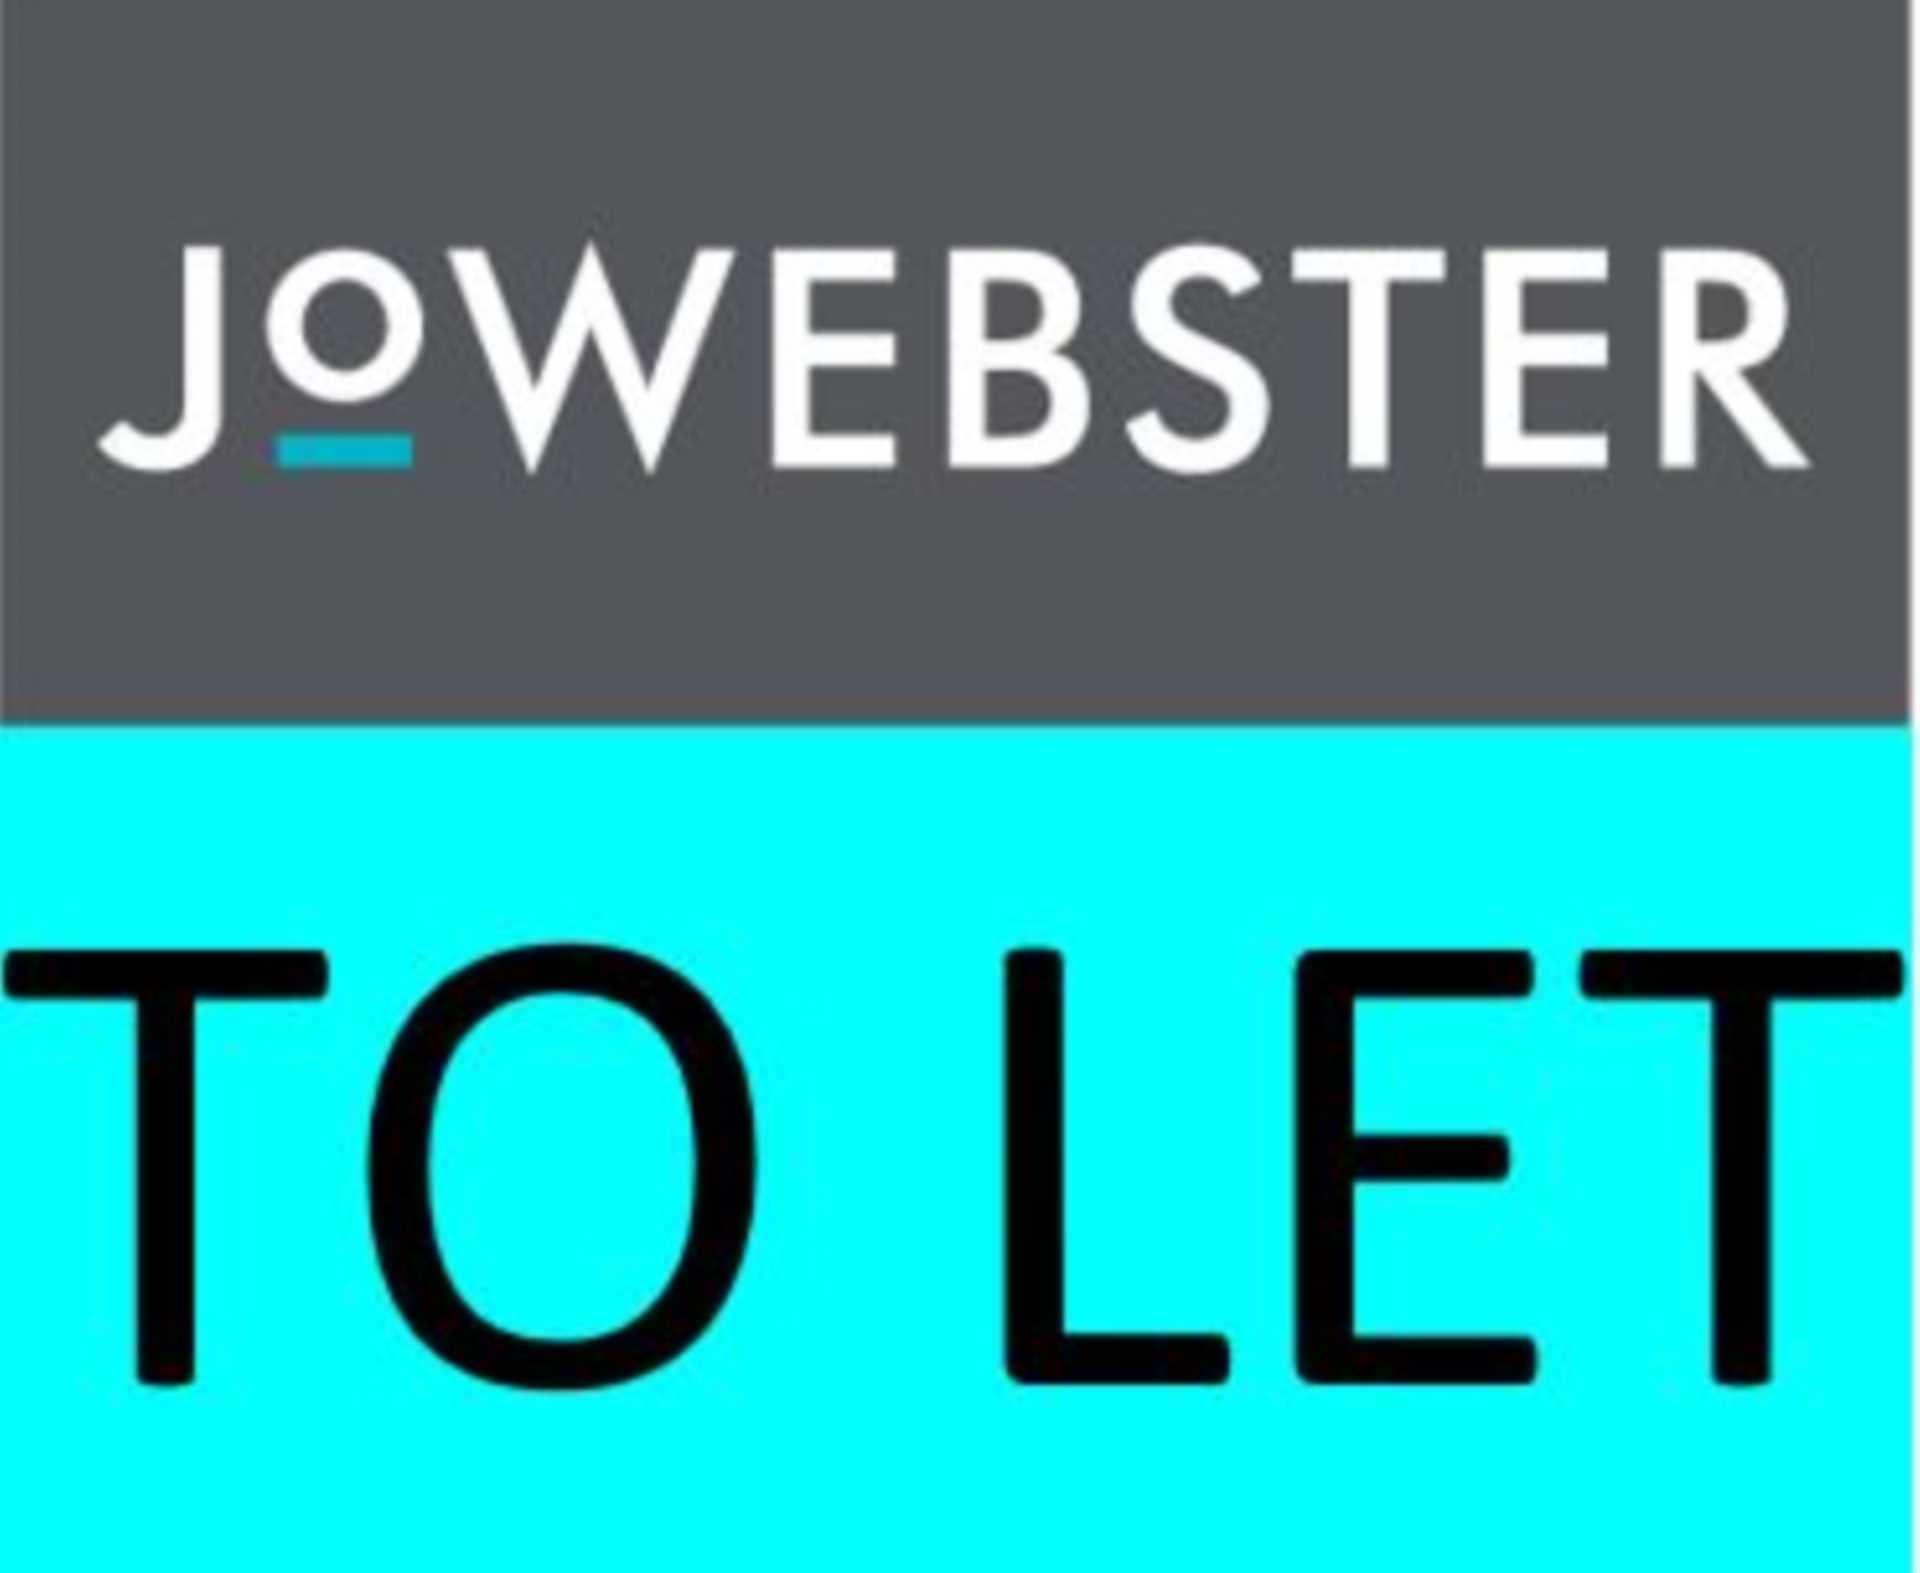 Jo Webster Properties now offer a full lettings service